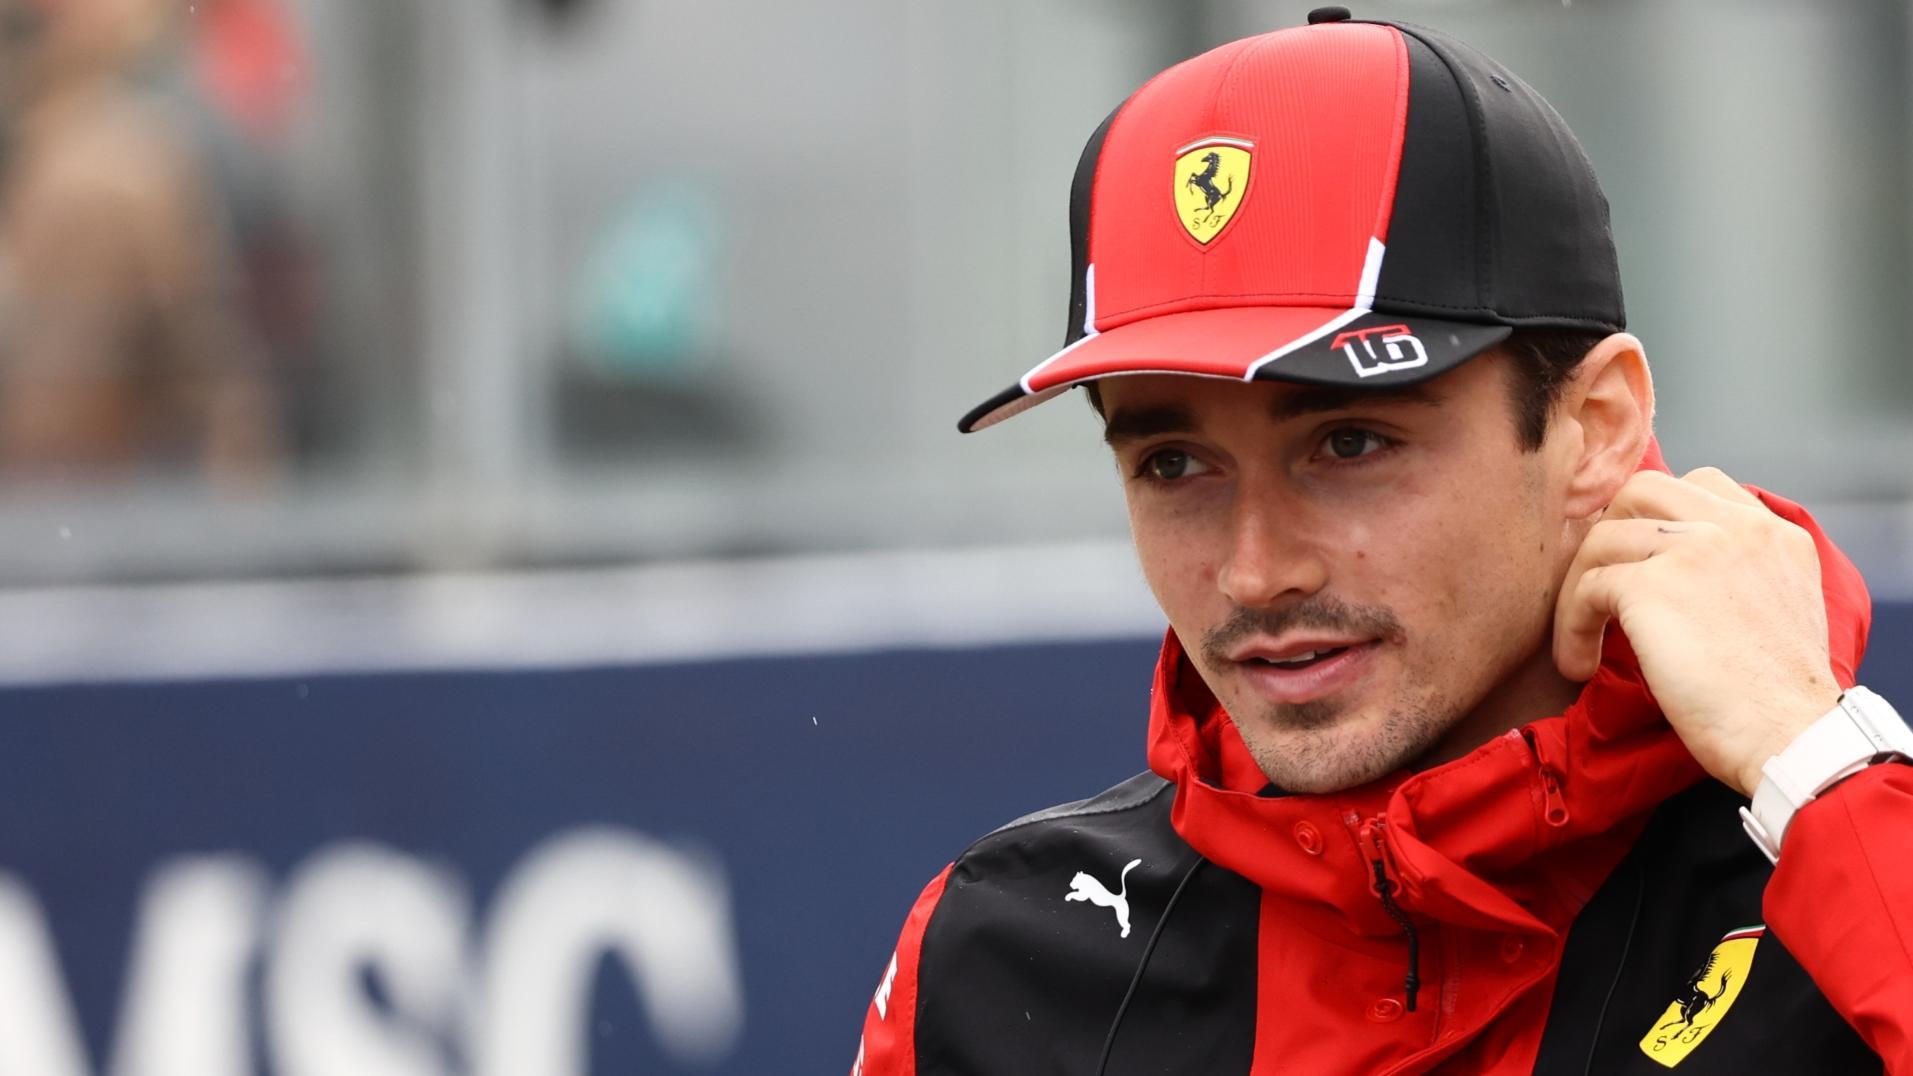 Do Ferrari need Leclerc more than Leclerc needs Ferrari?